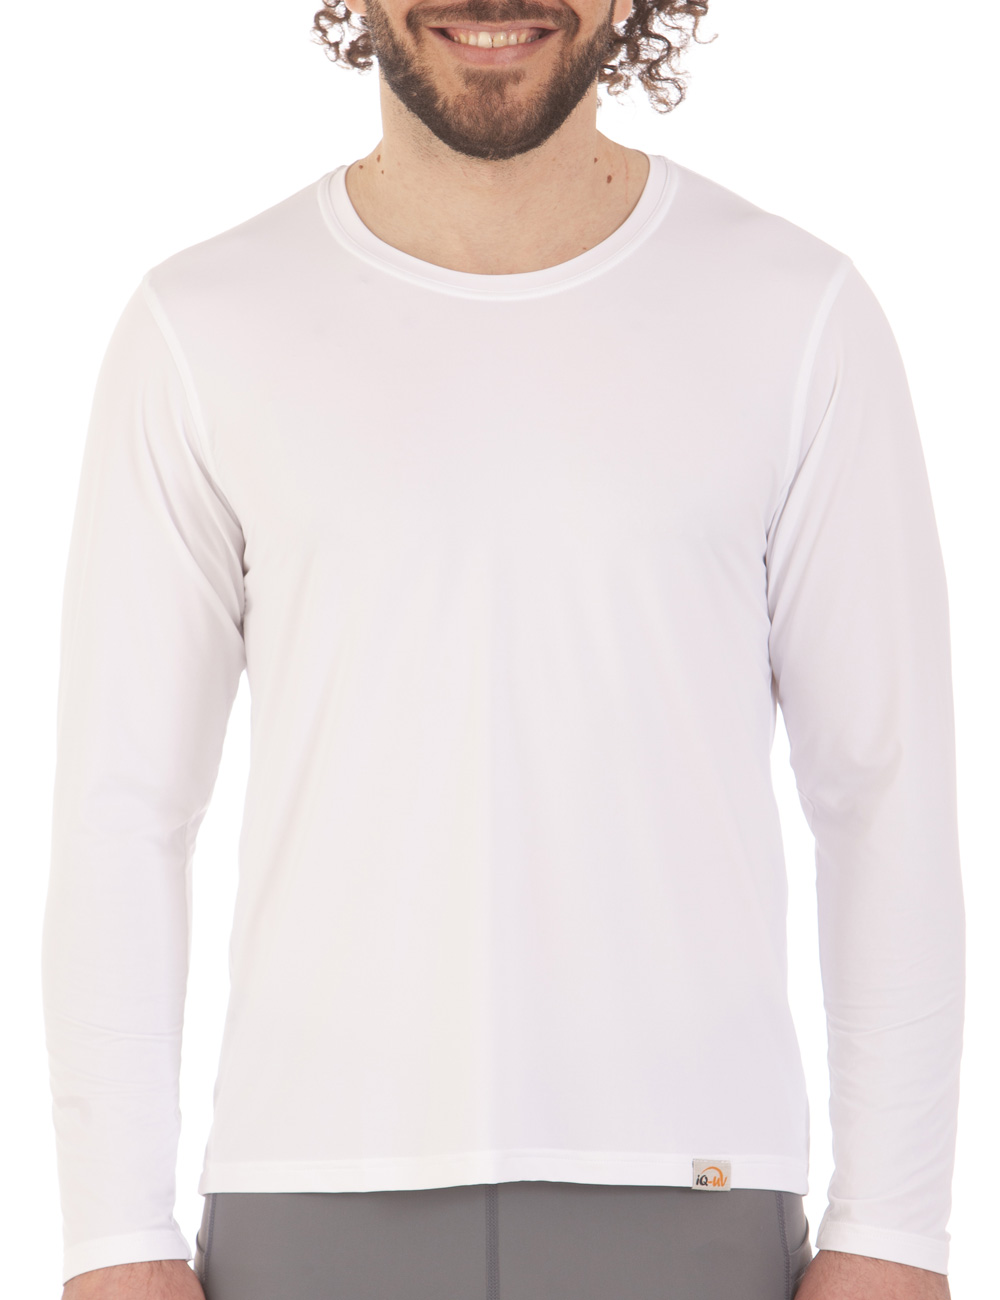 FREE Longarm Shirt weiß front